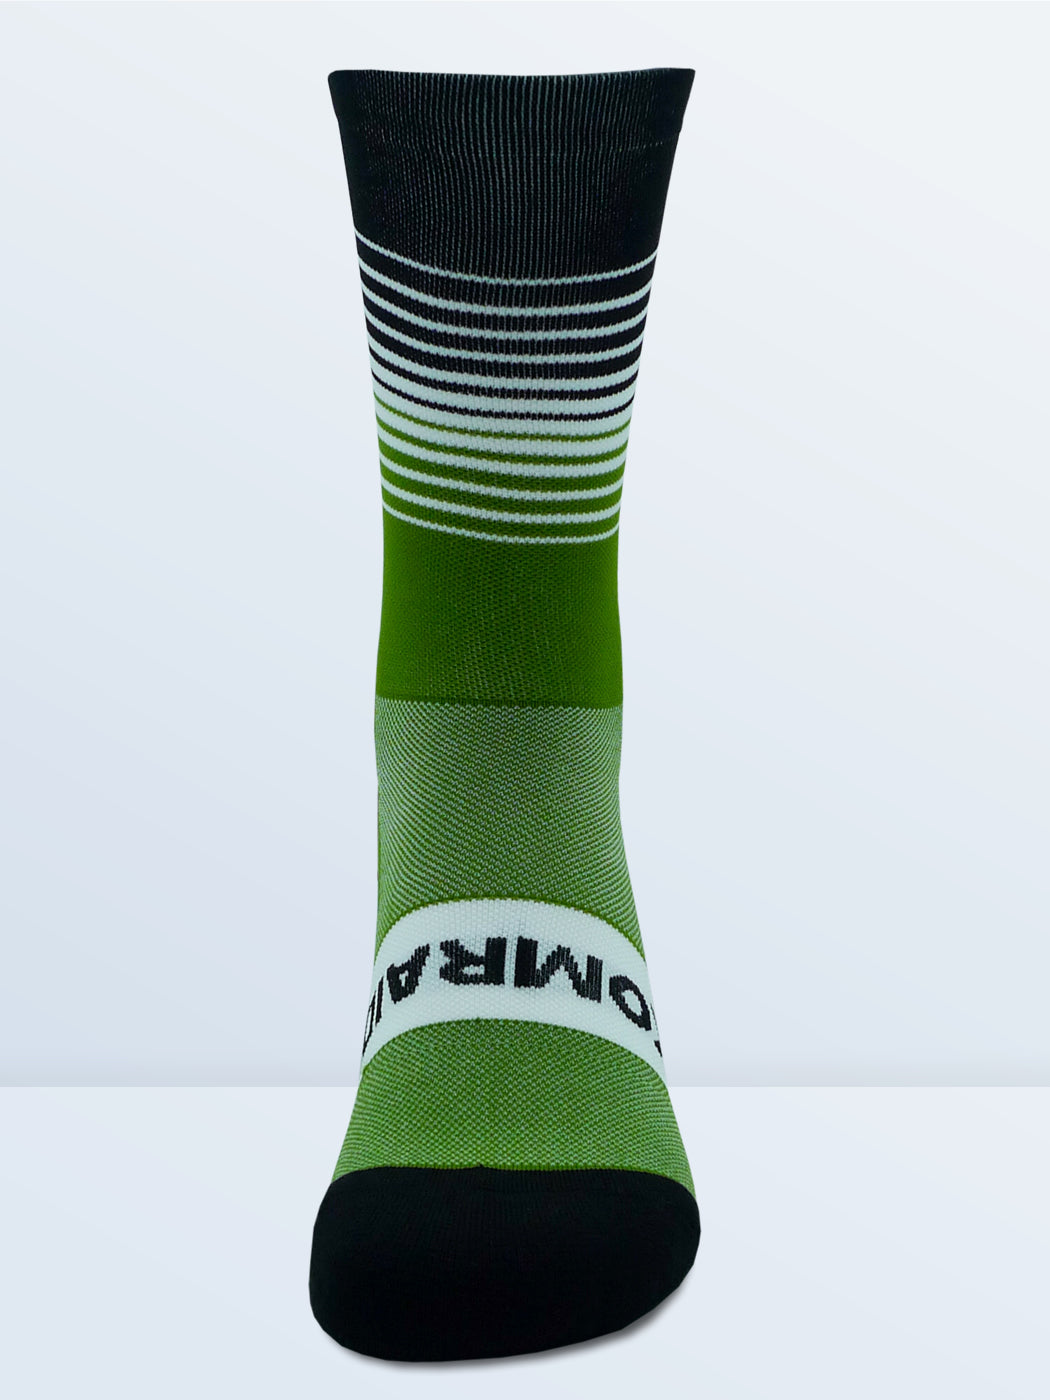 Swagger Socks - Olive Green & Black